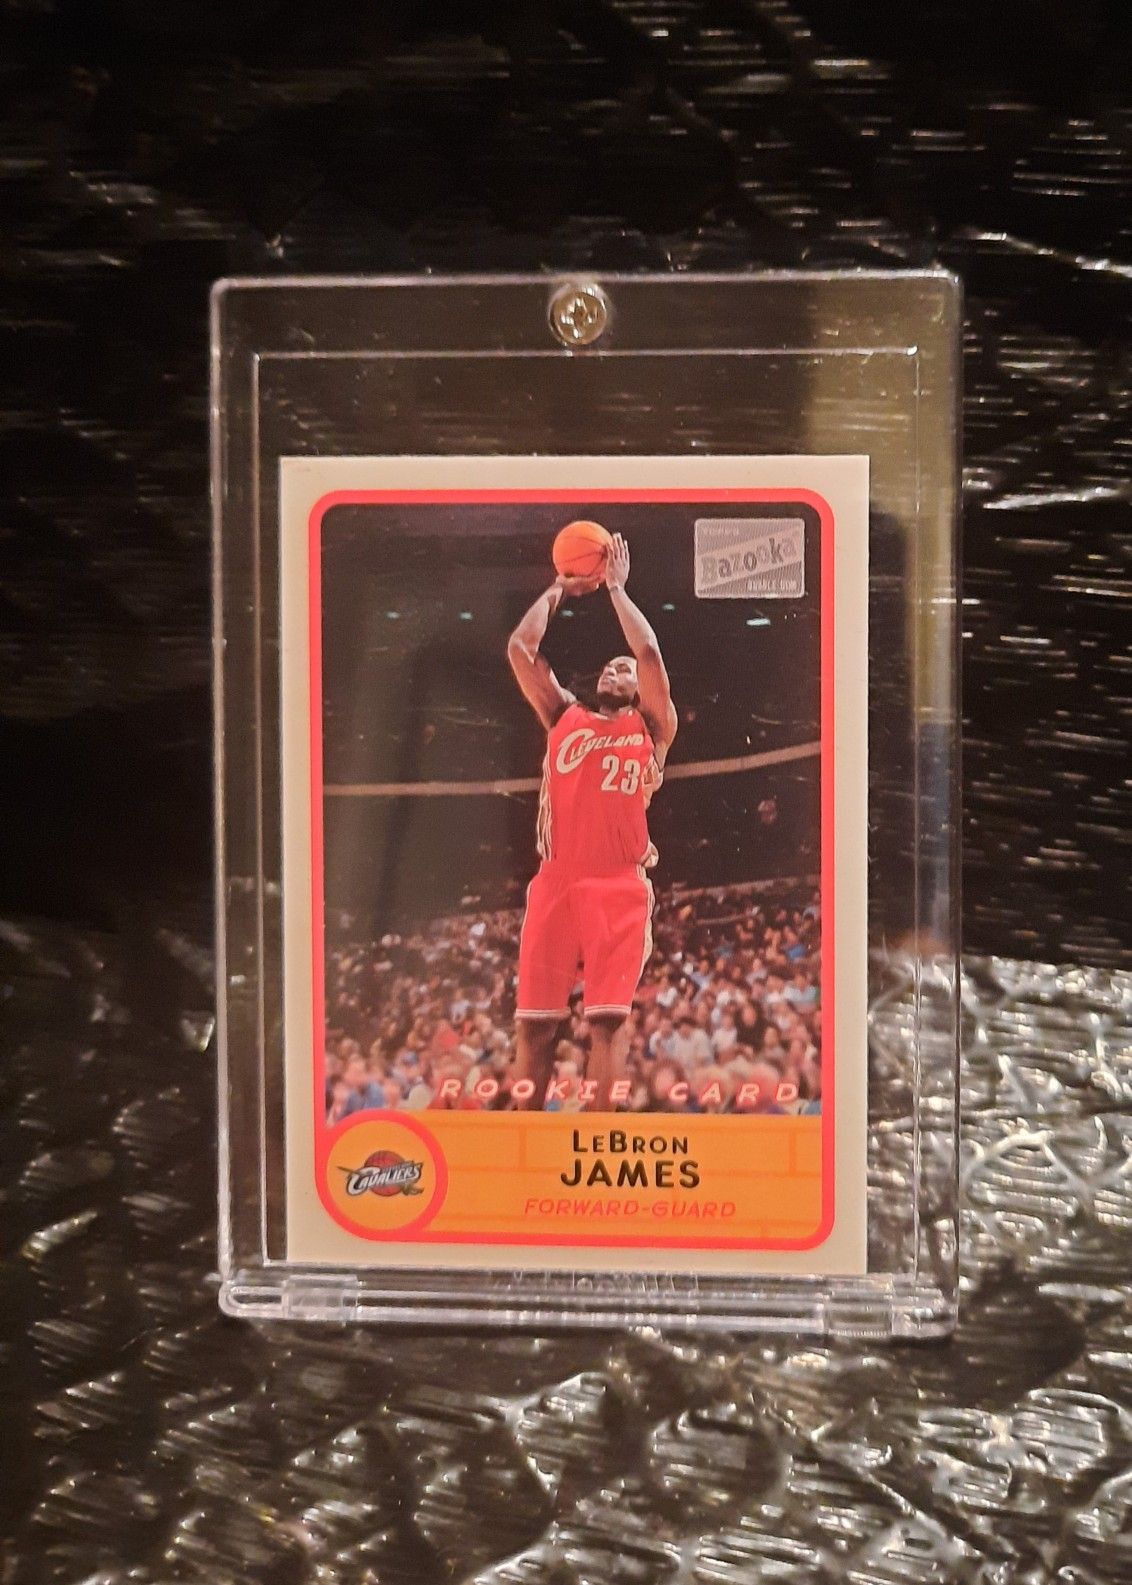 Gem Mint LeBron James 2003-04 Topps Bazooka Mini Rookie Card - Feel free to make an offer!